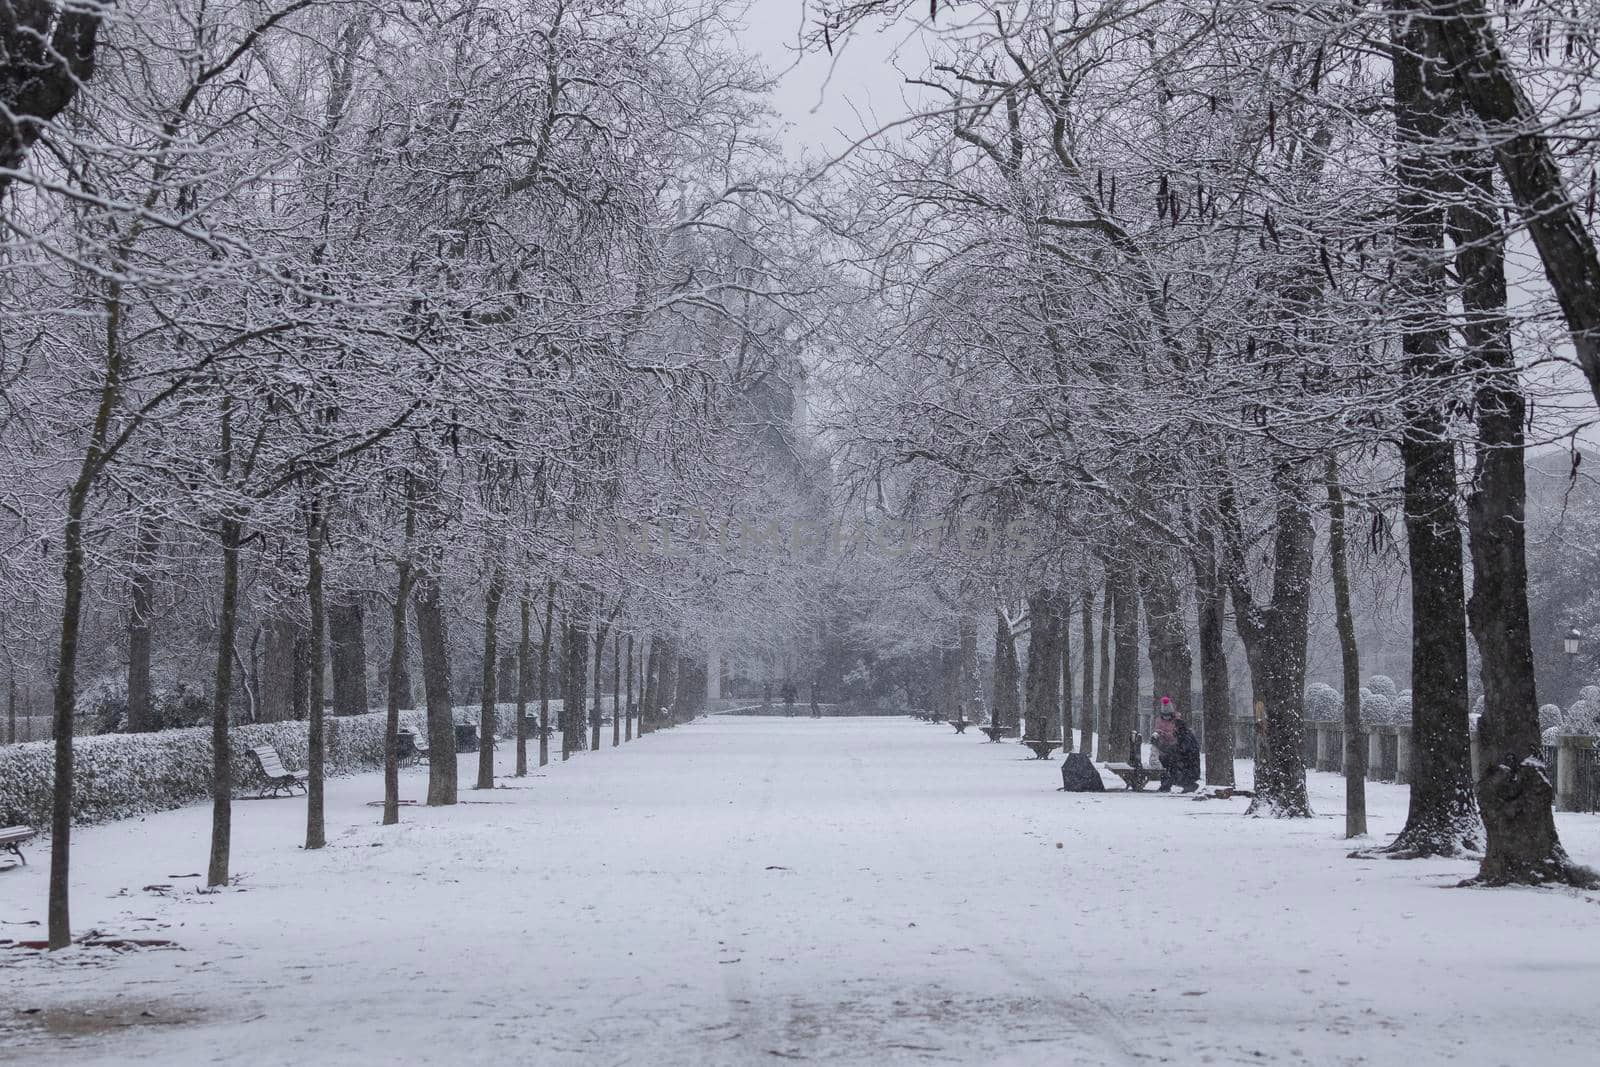 Retiro park in a snowy day, Madrid. by alvarobueno